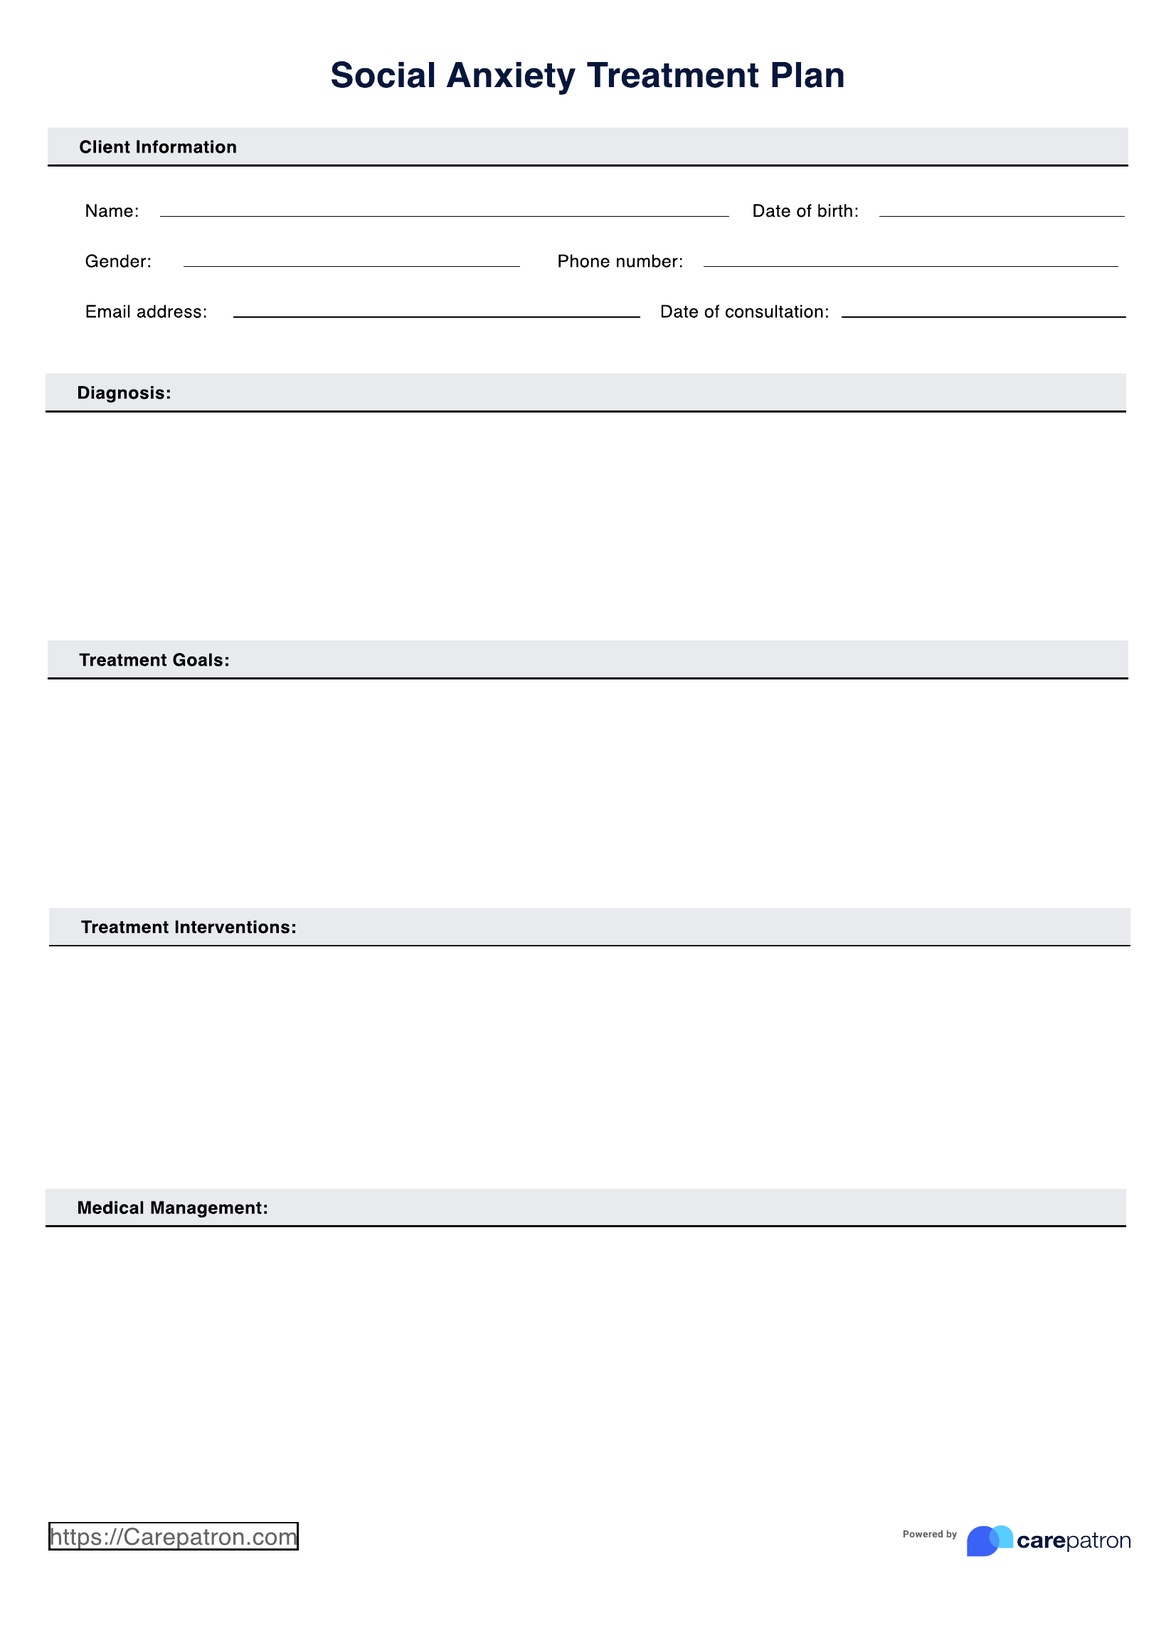 Social Anxiety Treatment Plan PDF Example